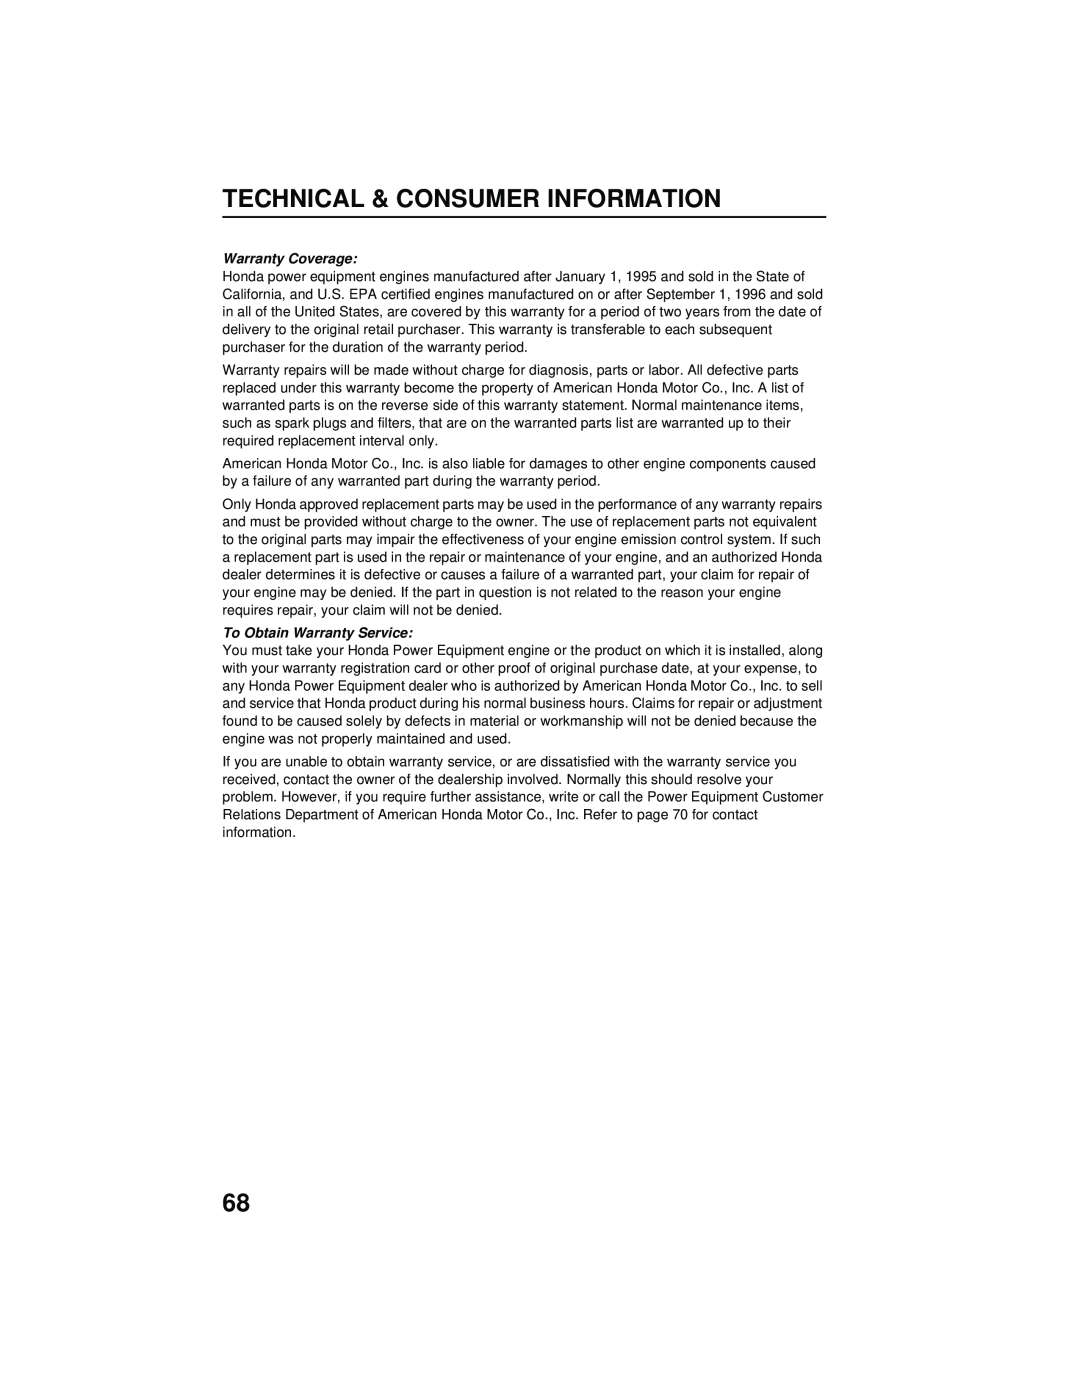 Honda Power Equipment HRB216TXA Technical & Consumer Information, Warranty Coverage, To Obtain Warranty Service 